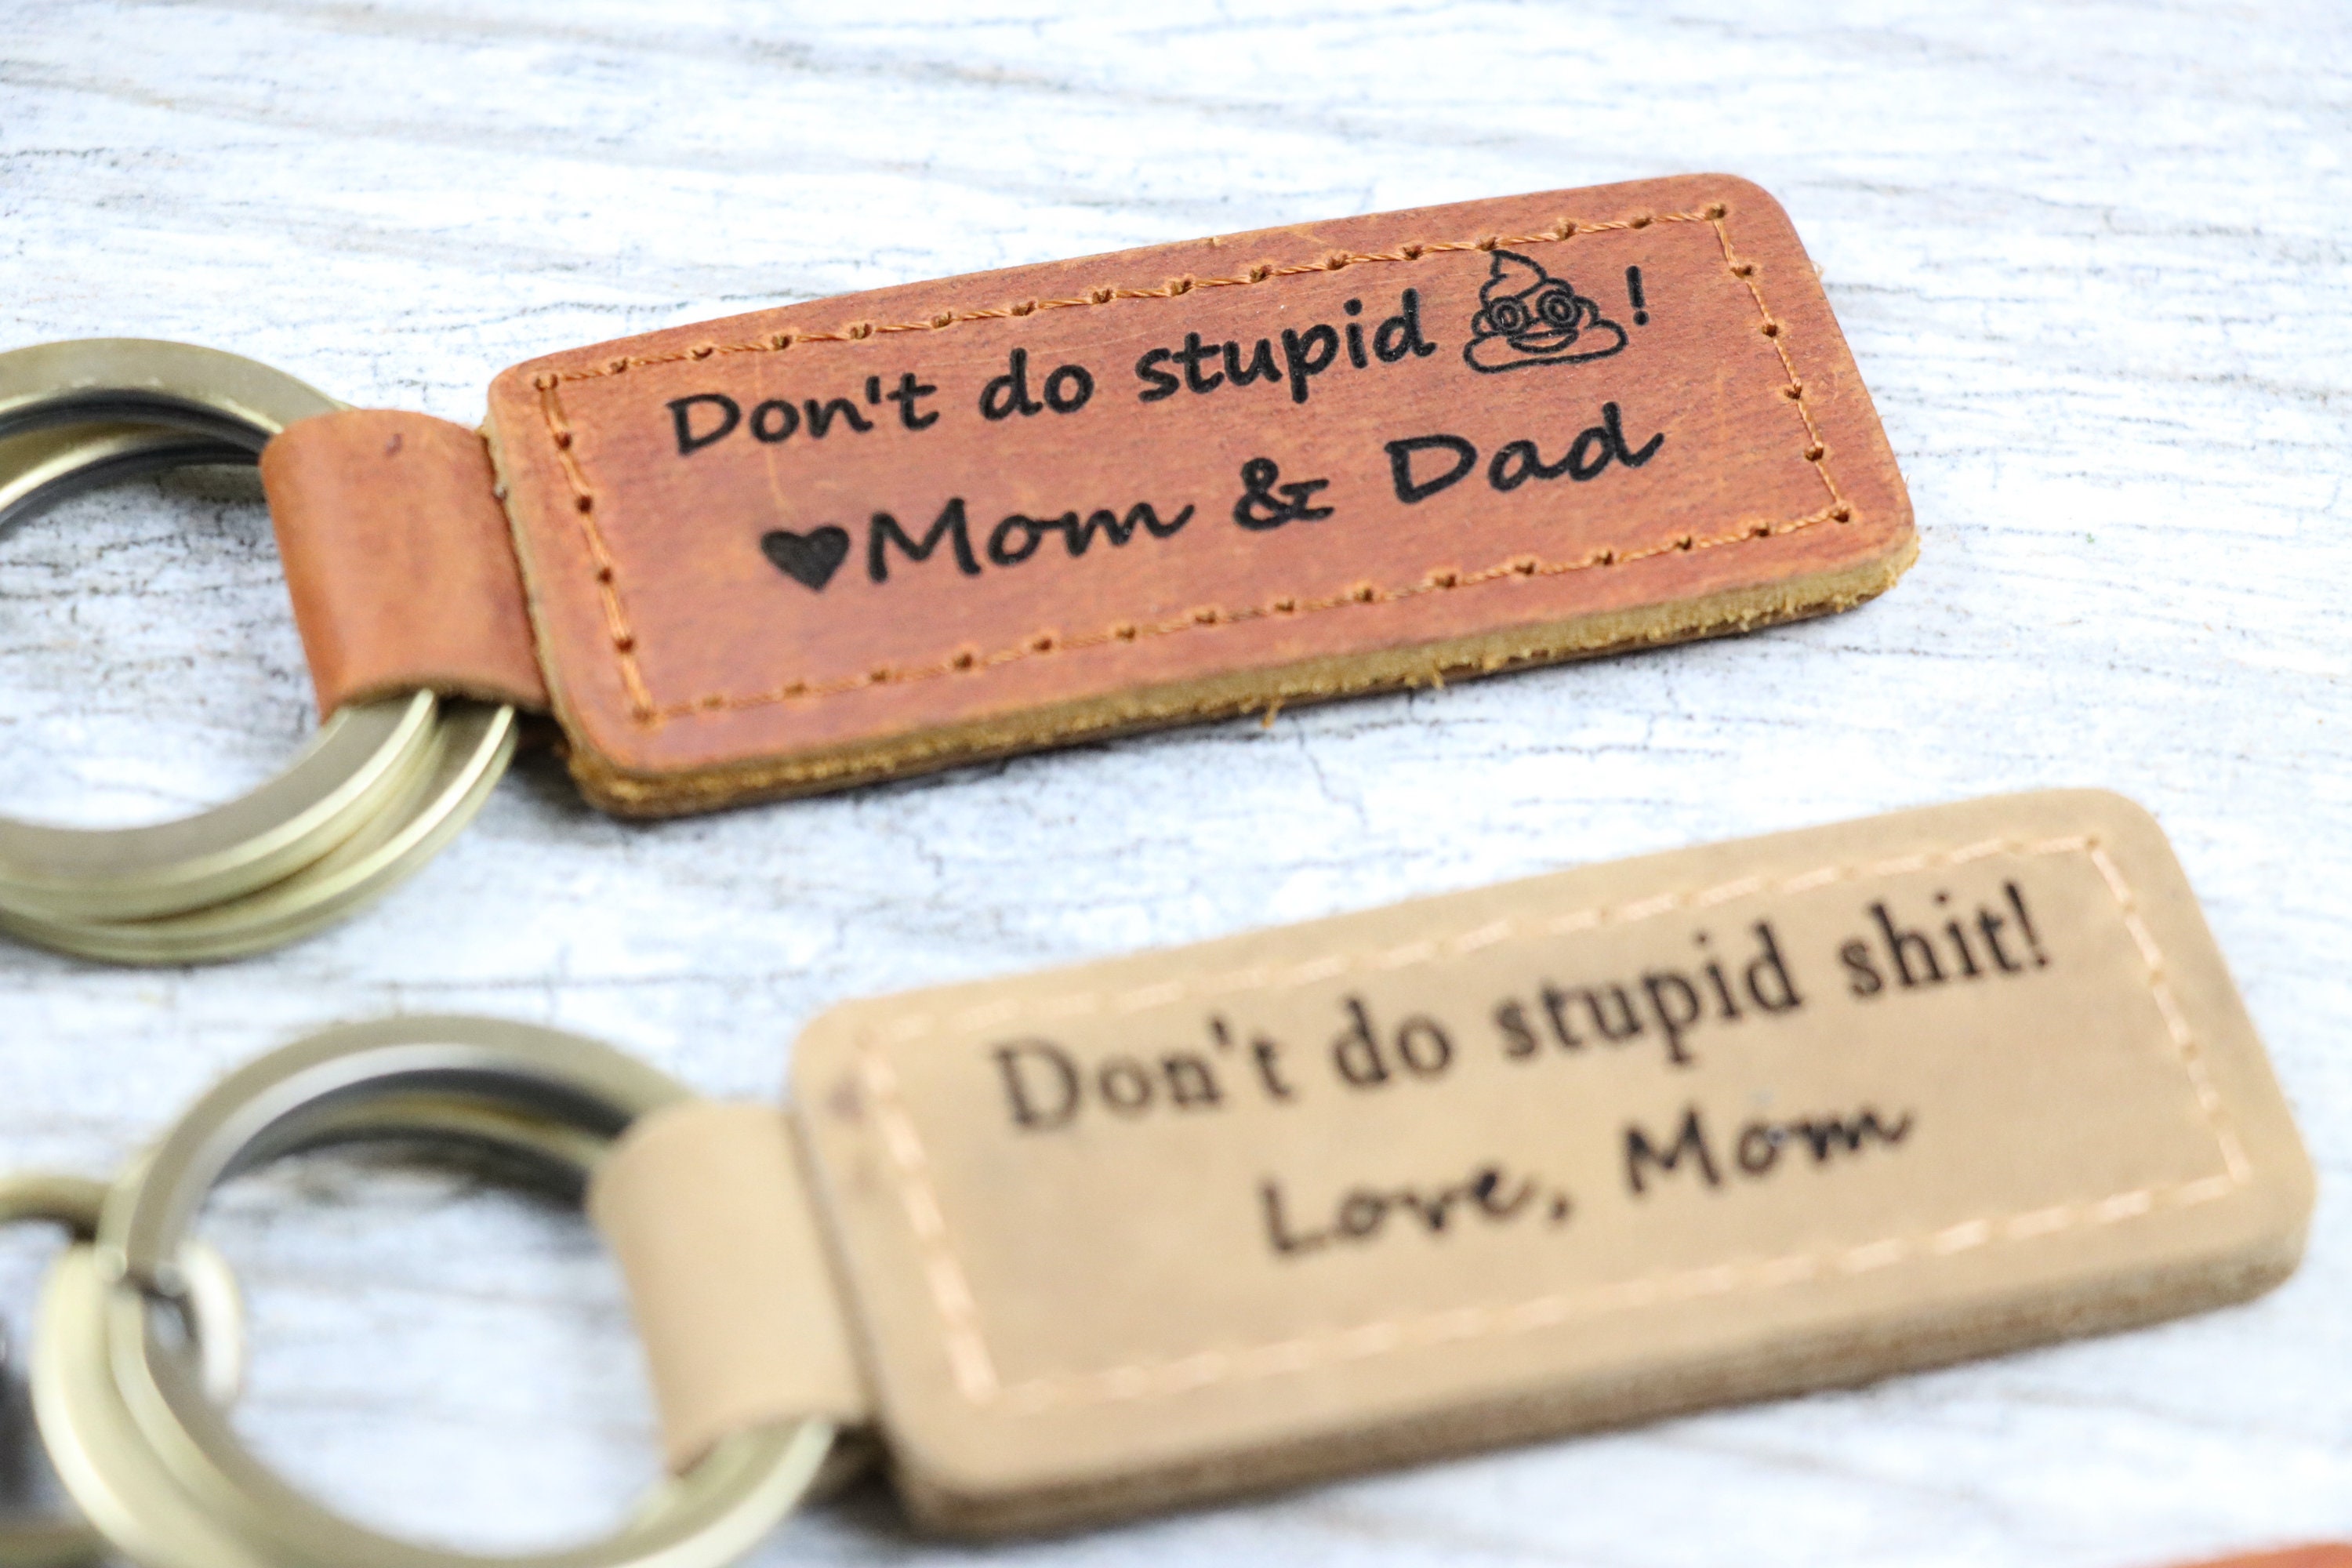 Don't Do Dumb Sh*t Keychain Love Dad Mom or Grandma Wood Teen Drive Gift Be  Safe